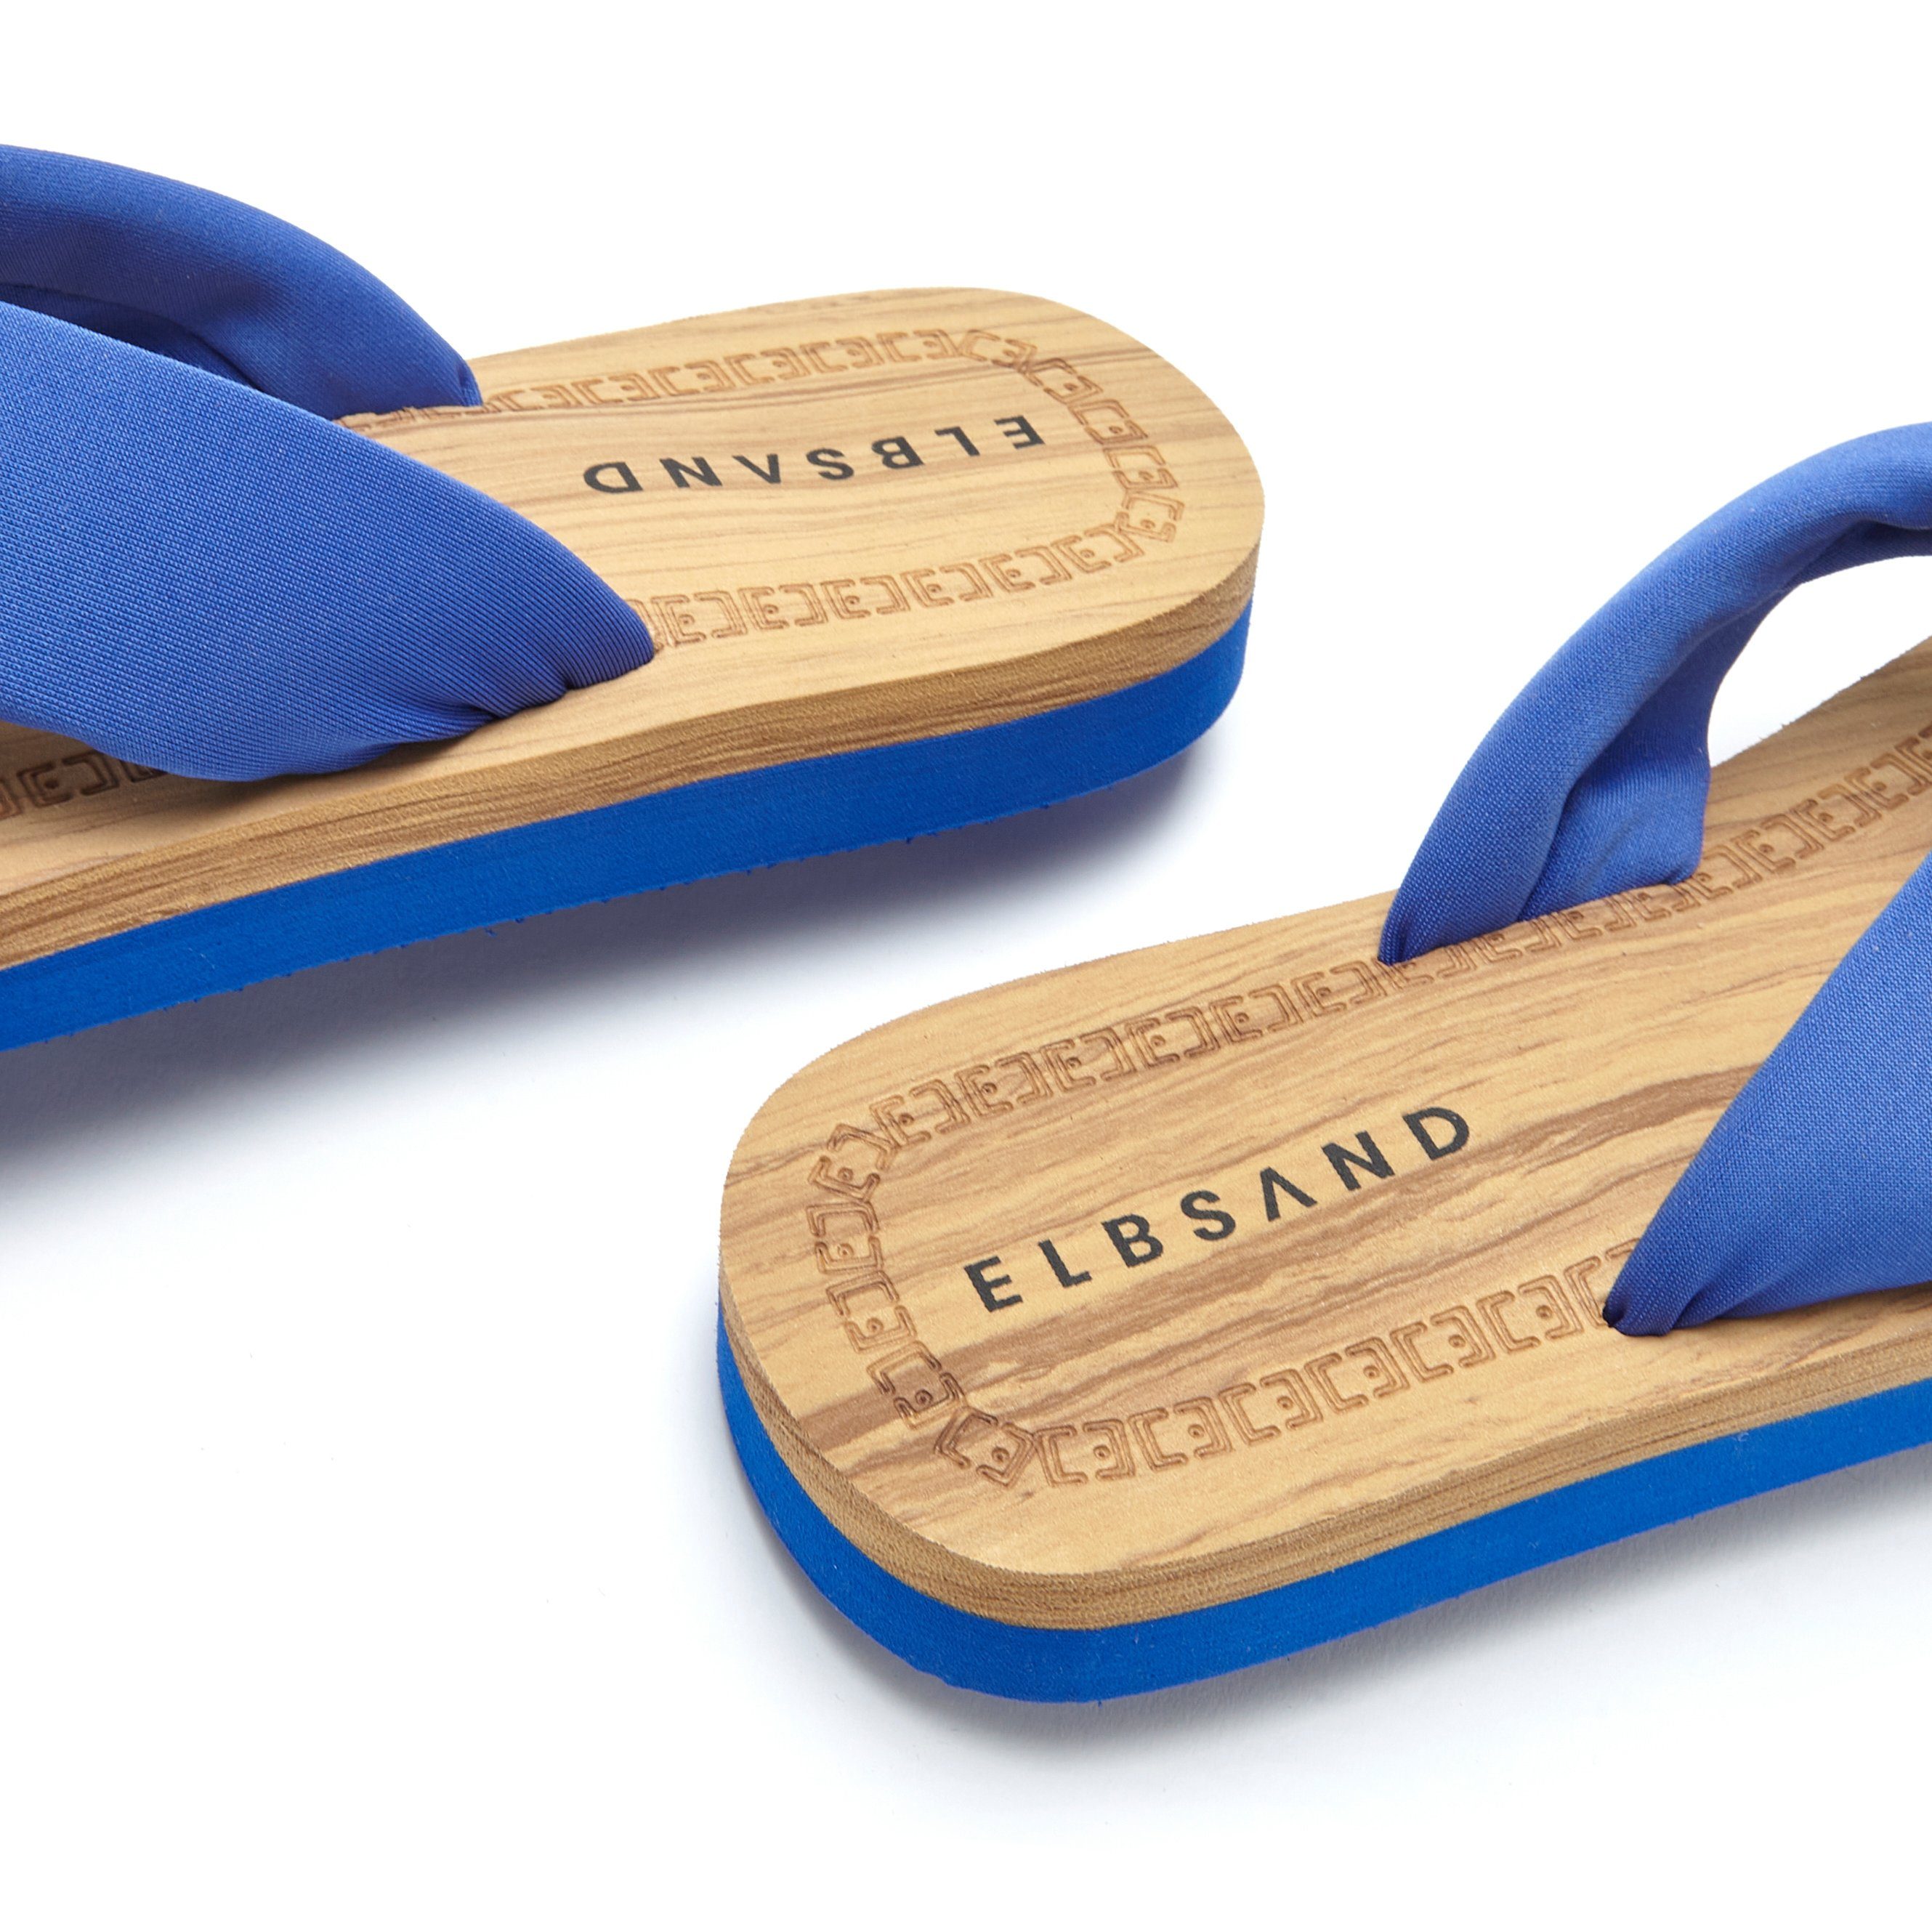 Elbsand Badezehentrenner Sandale, Pantolette, blau ultraleicht Badeschuh VEGAN